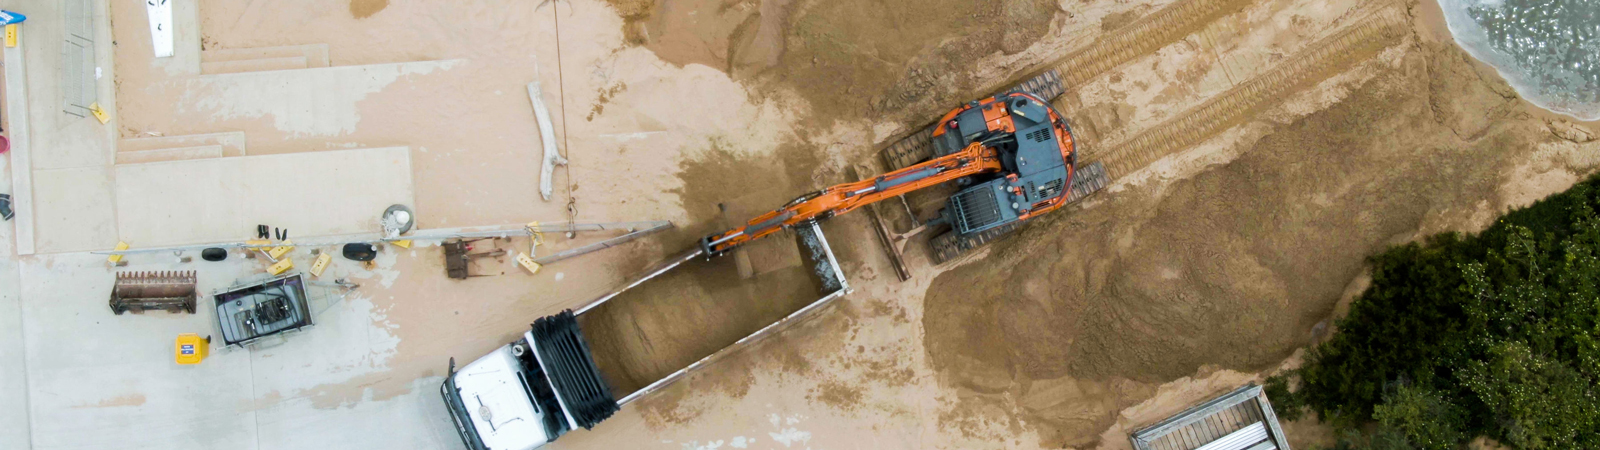 Aerial shot of machinery operating